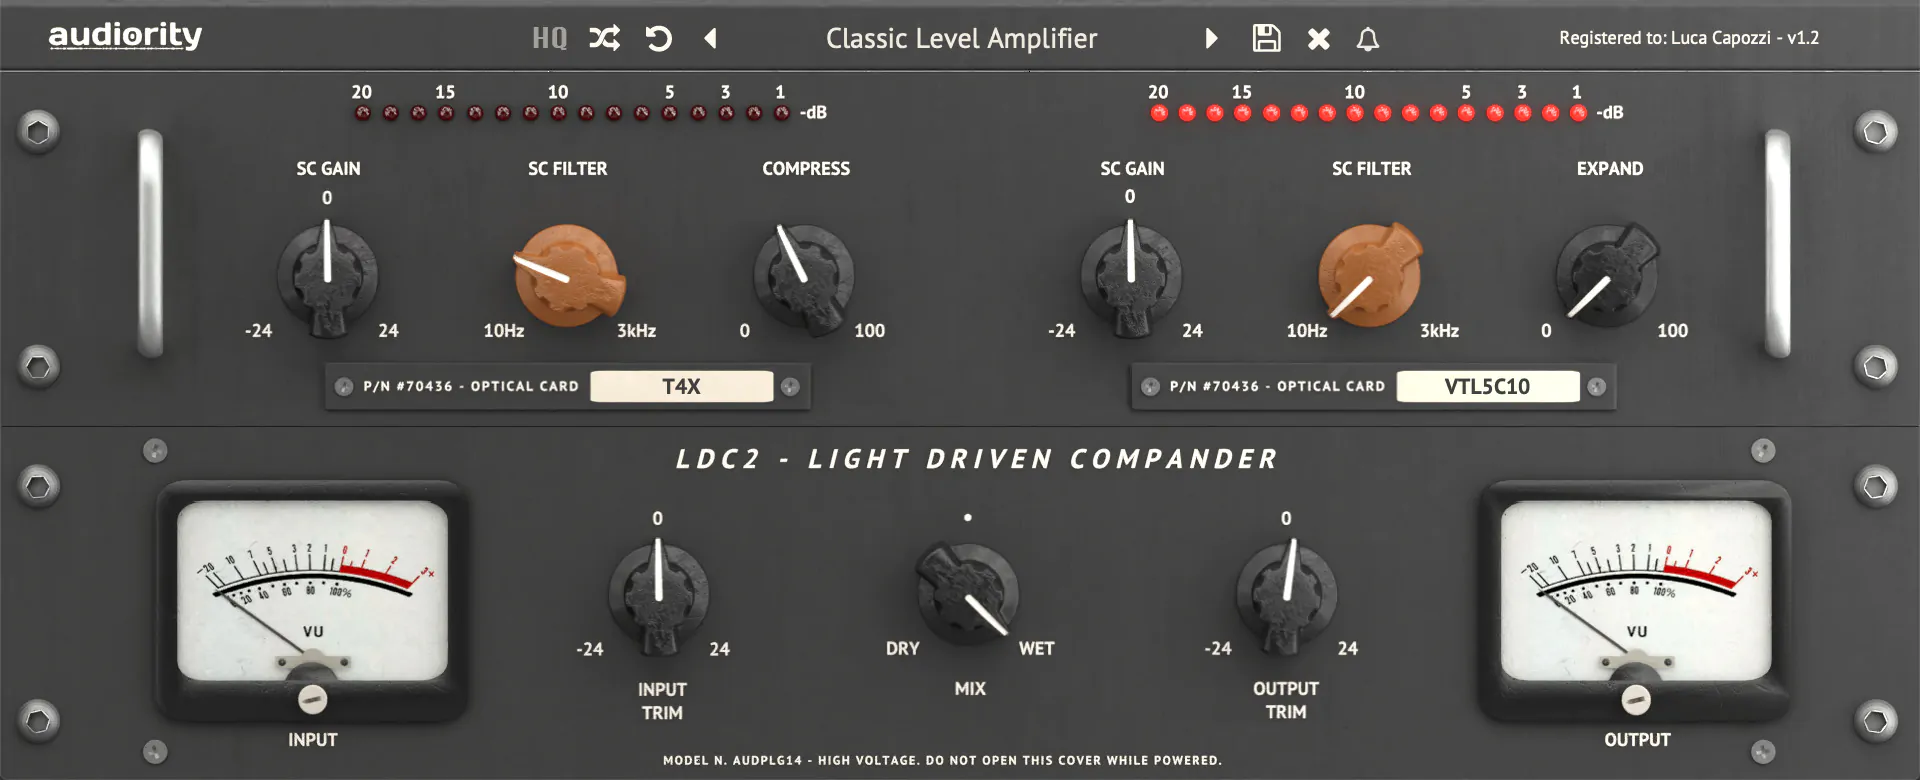 Audiority LDC2 COMPANDER